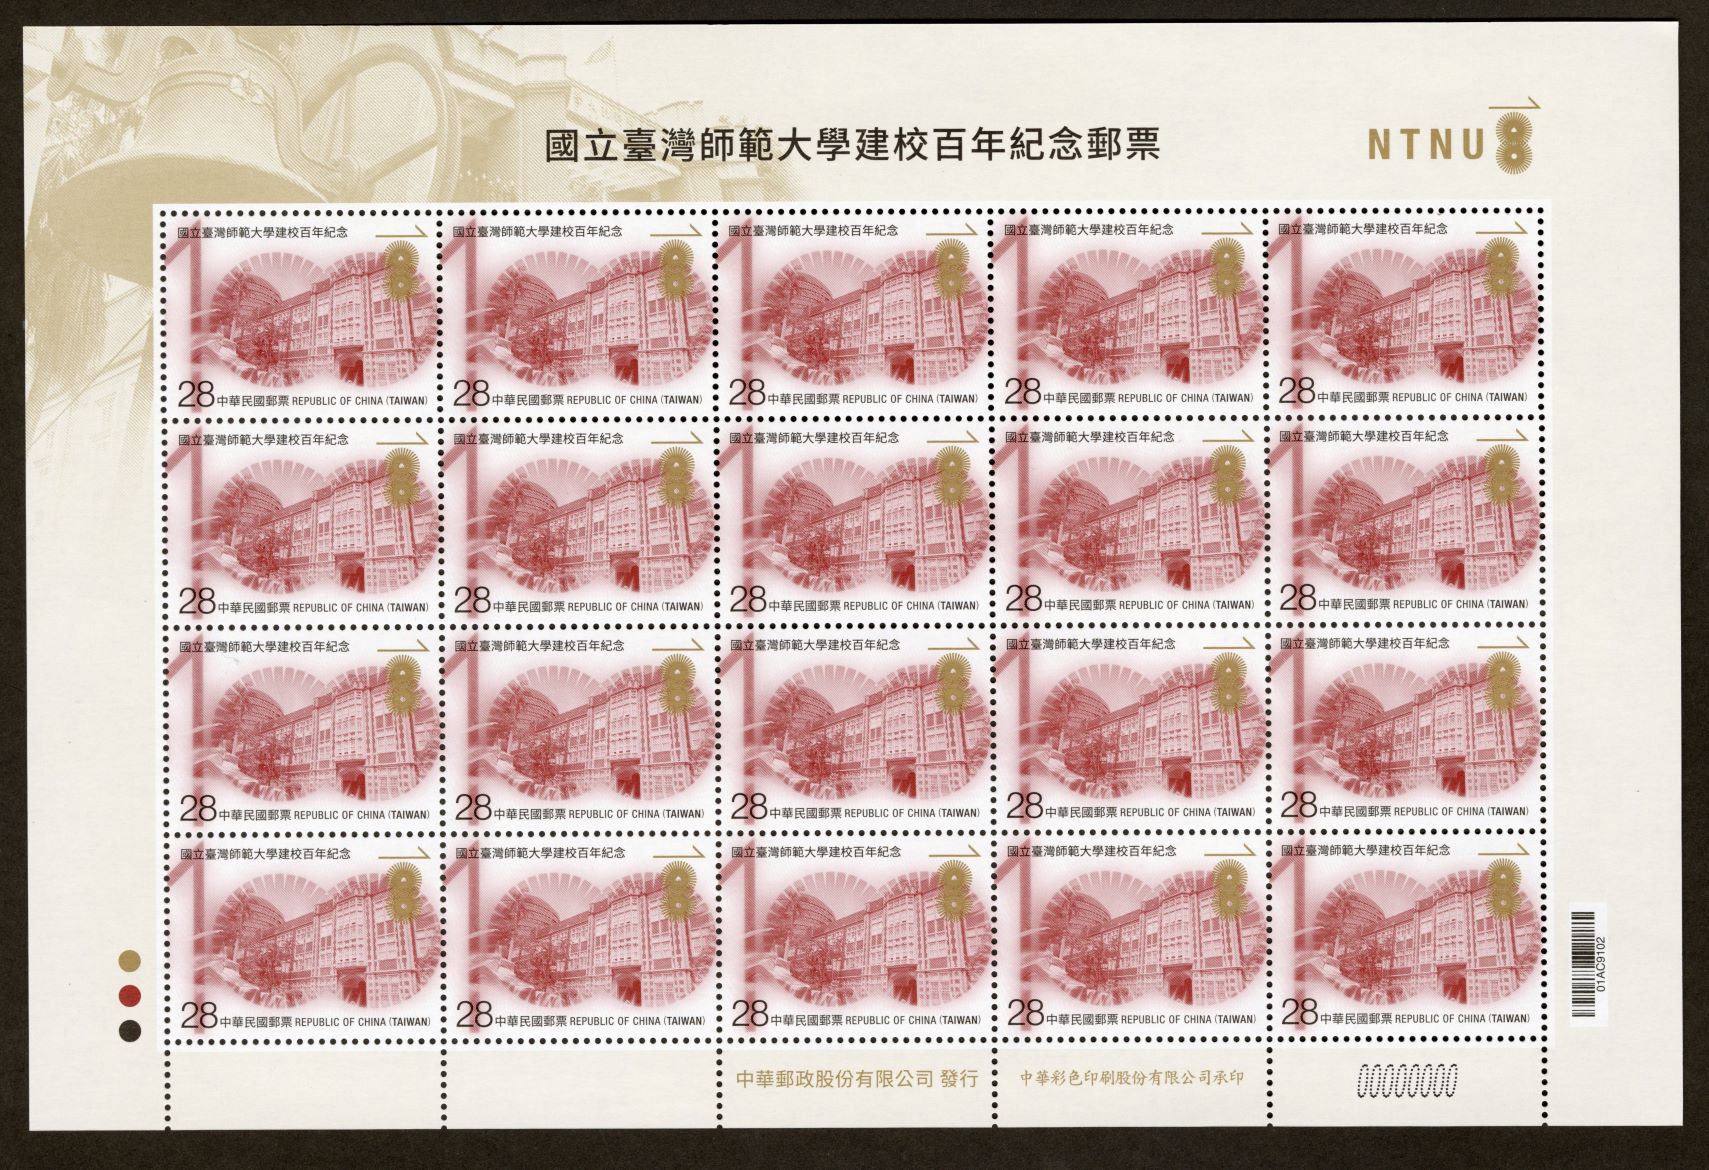 (Com.345.20)Com.345 National Taiwan Normal University 100th Anniversary Commemorative Issue